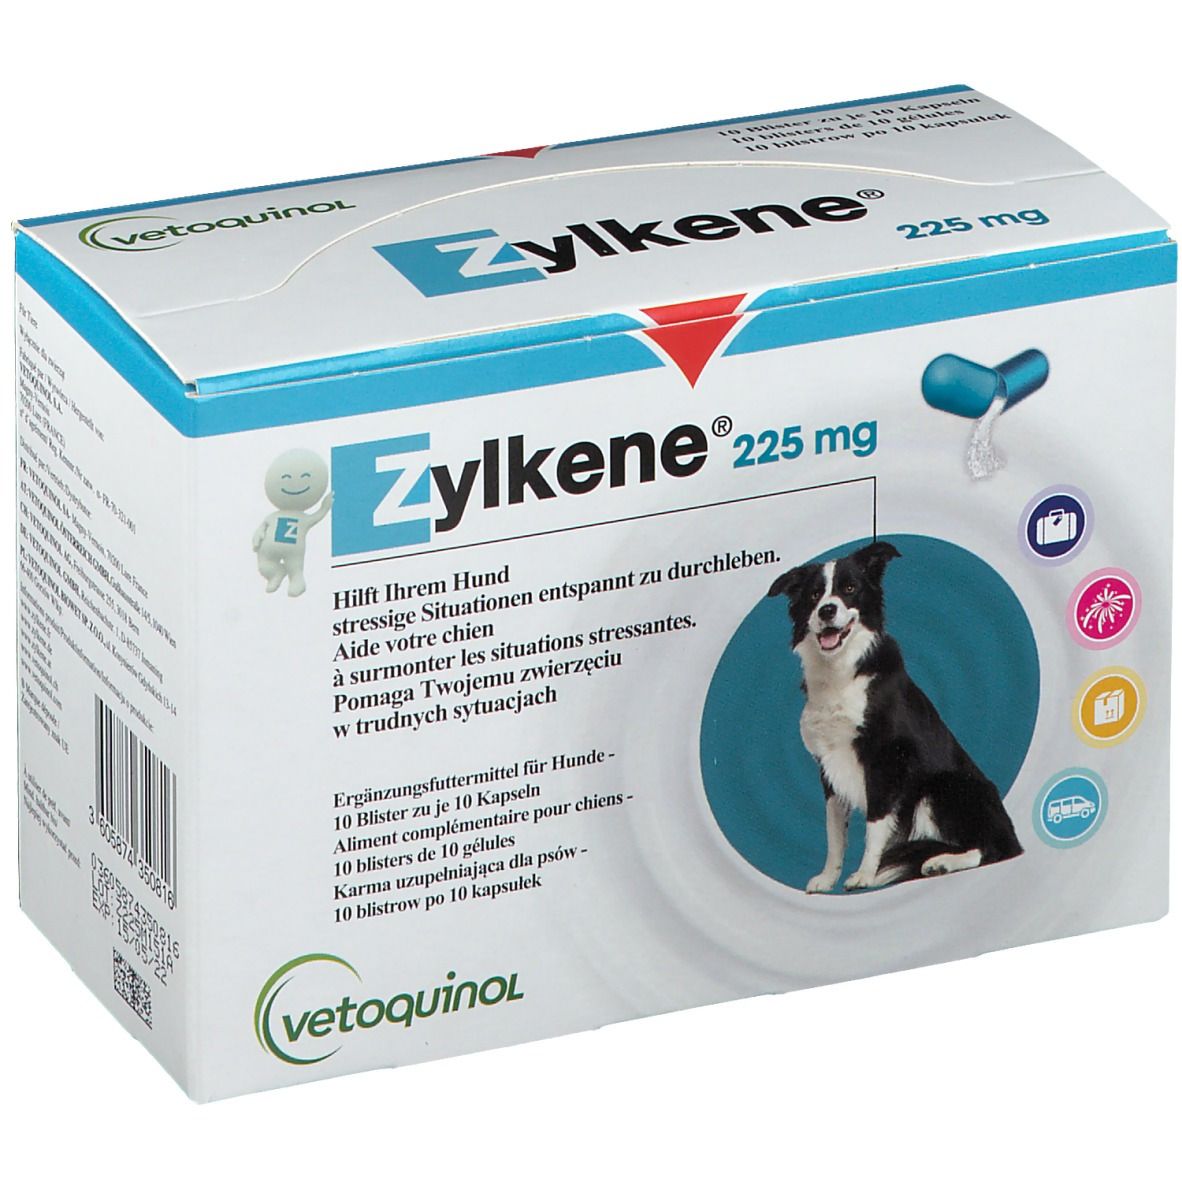 Image of Zylkène® 225 mg für Hunde